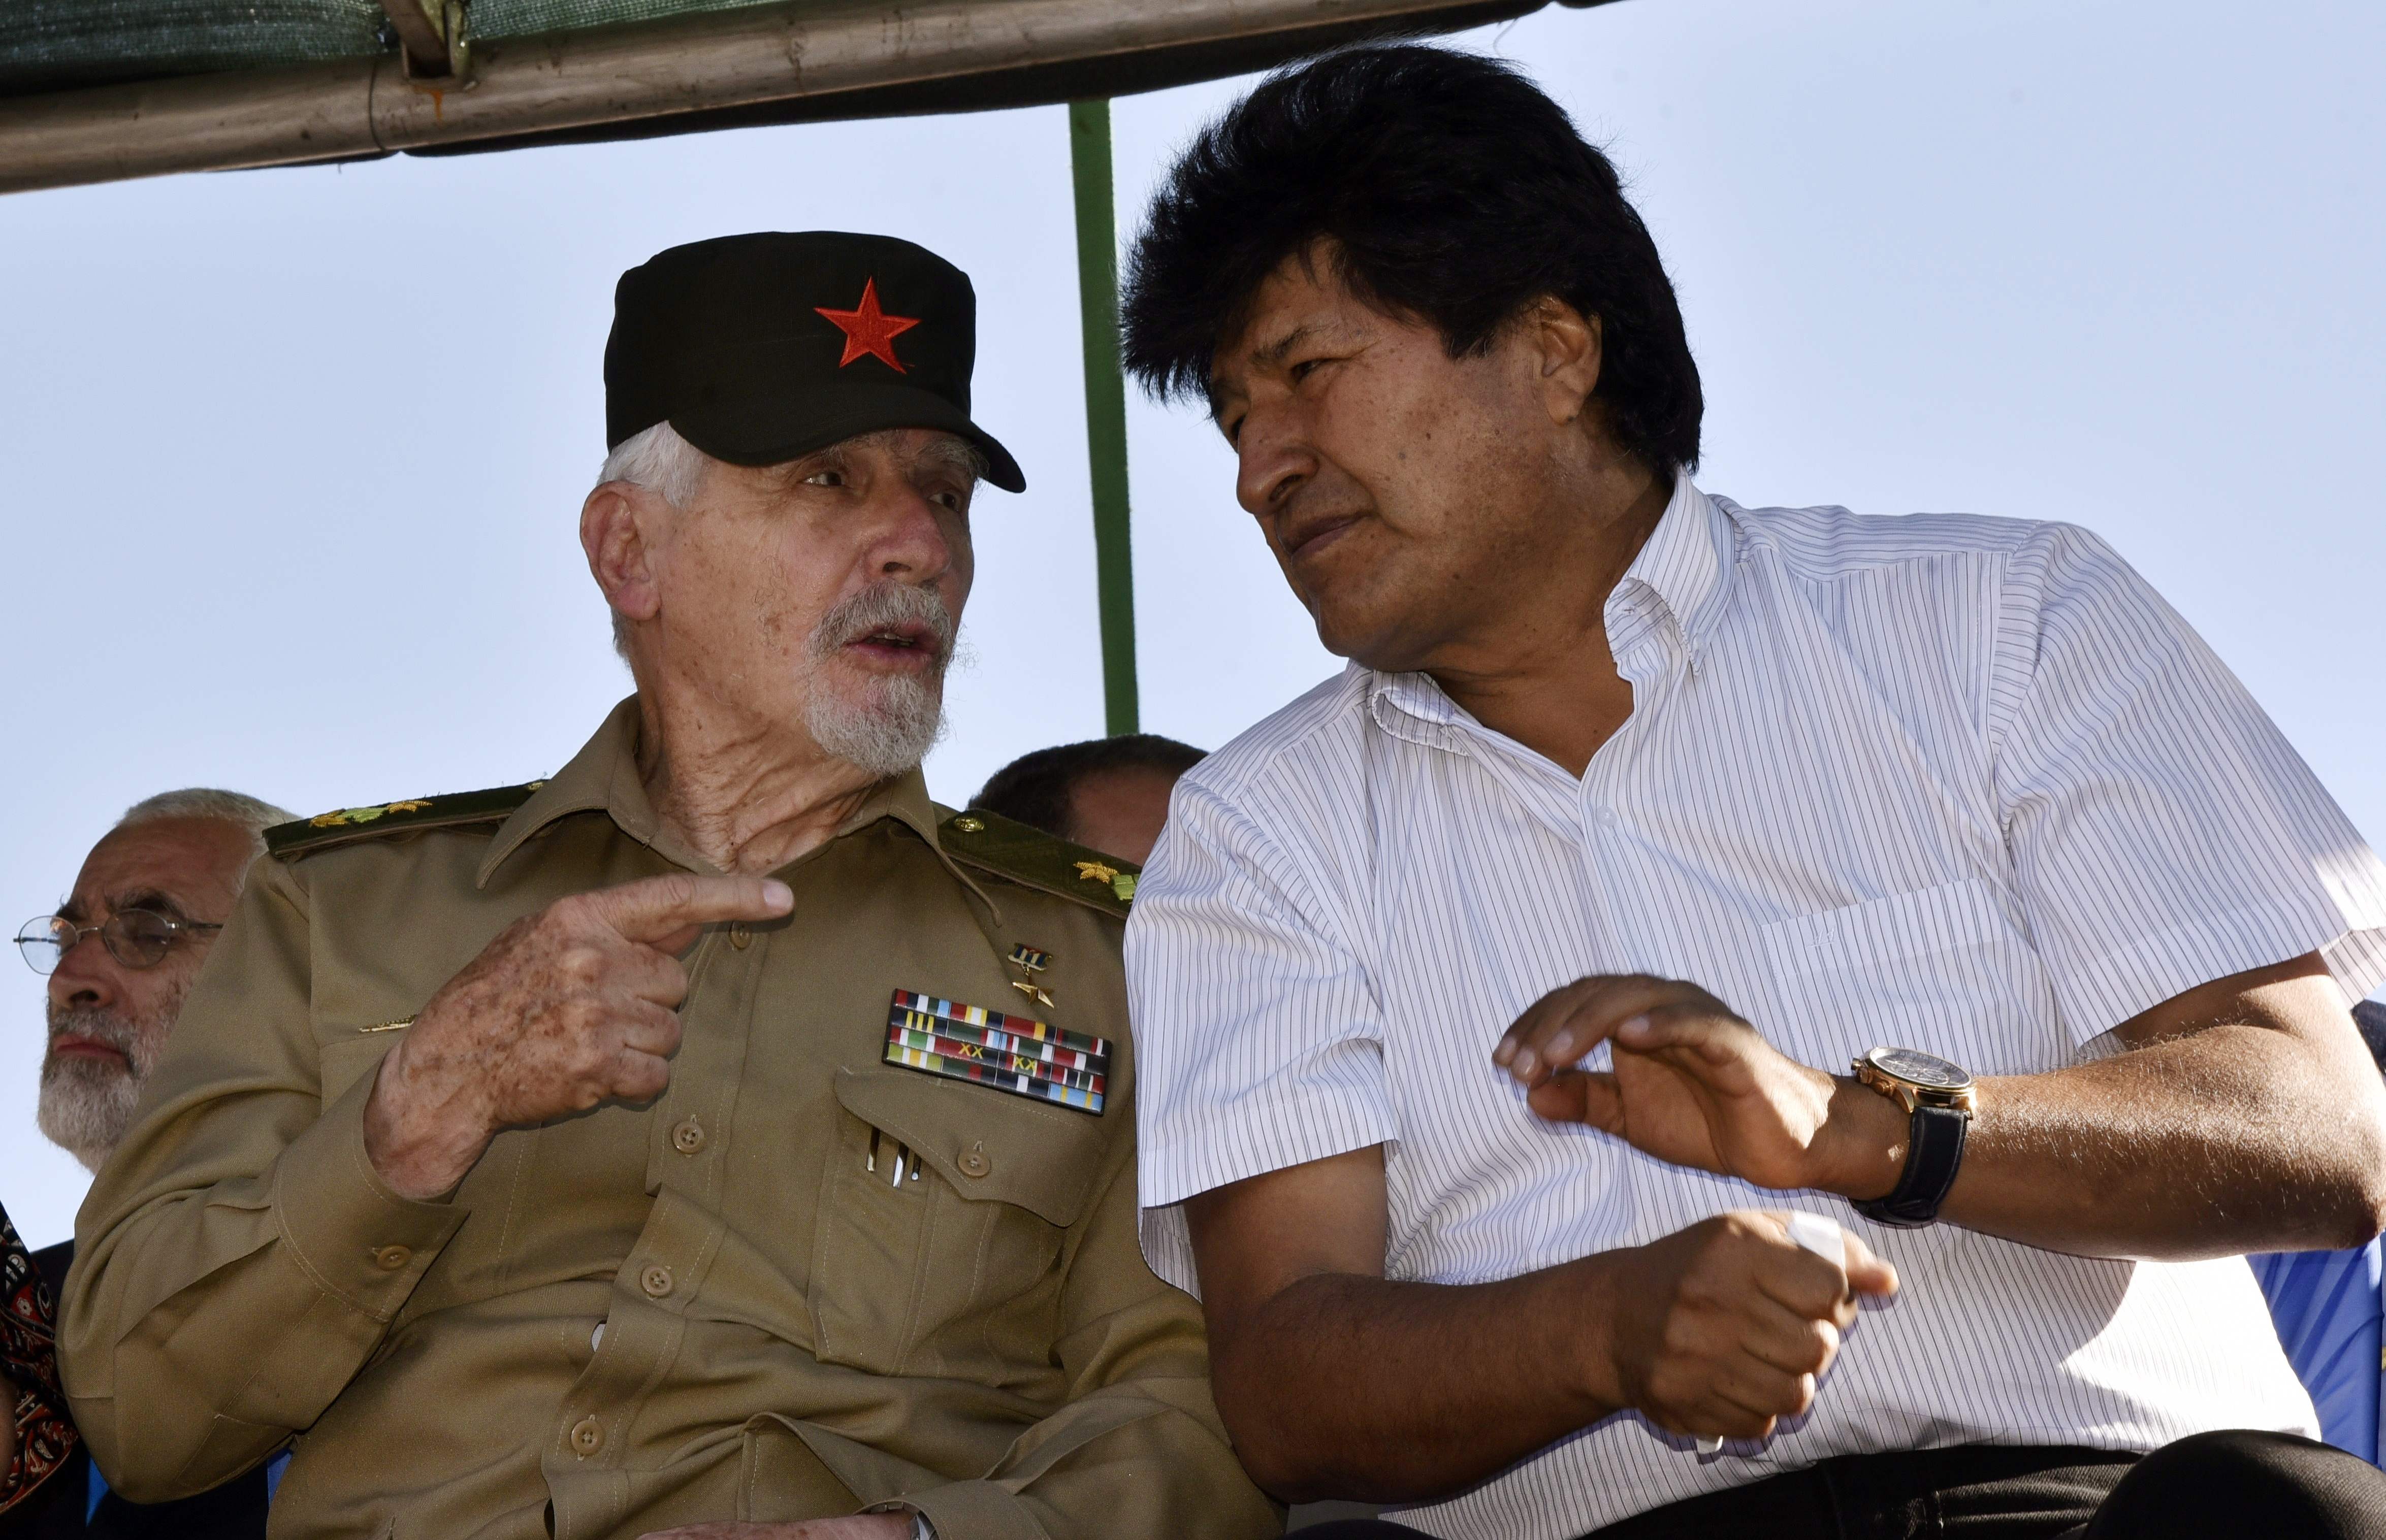 حديث بين رئيس بوليفيا ونائب رئيس كوبا